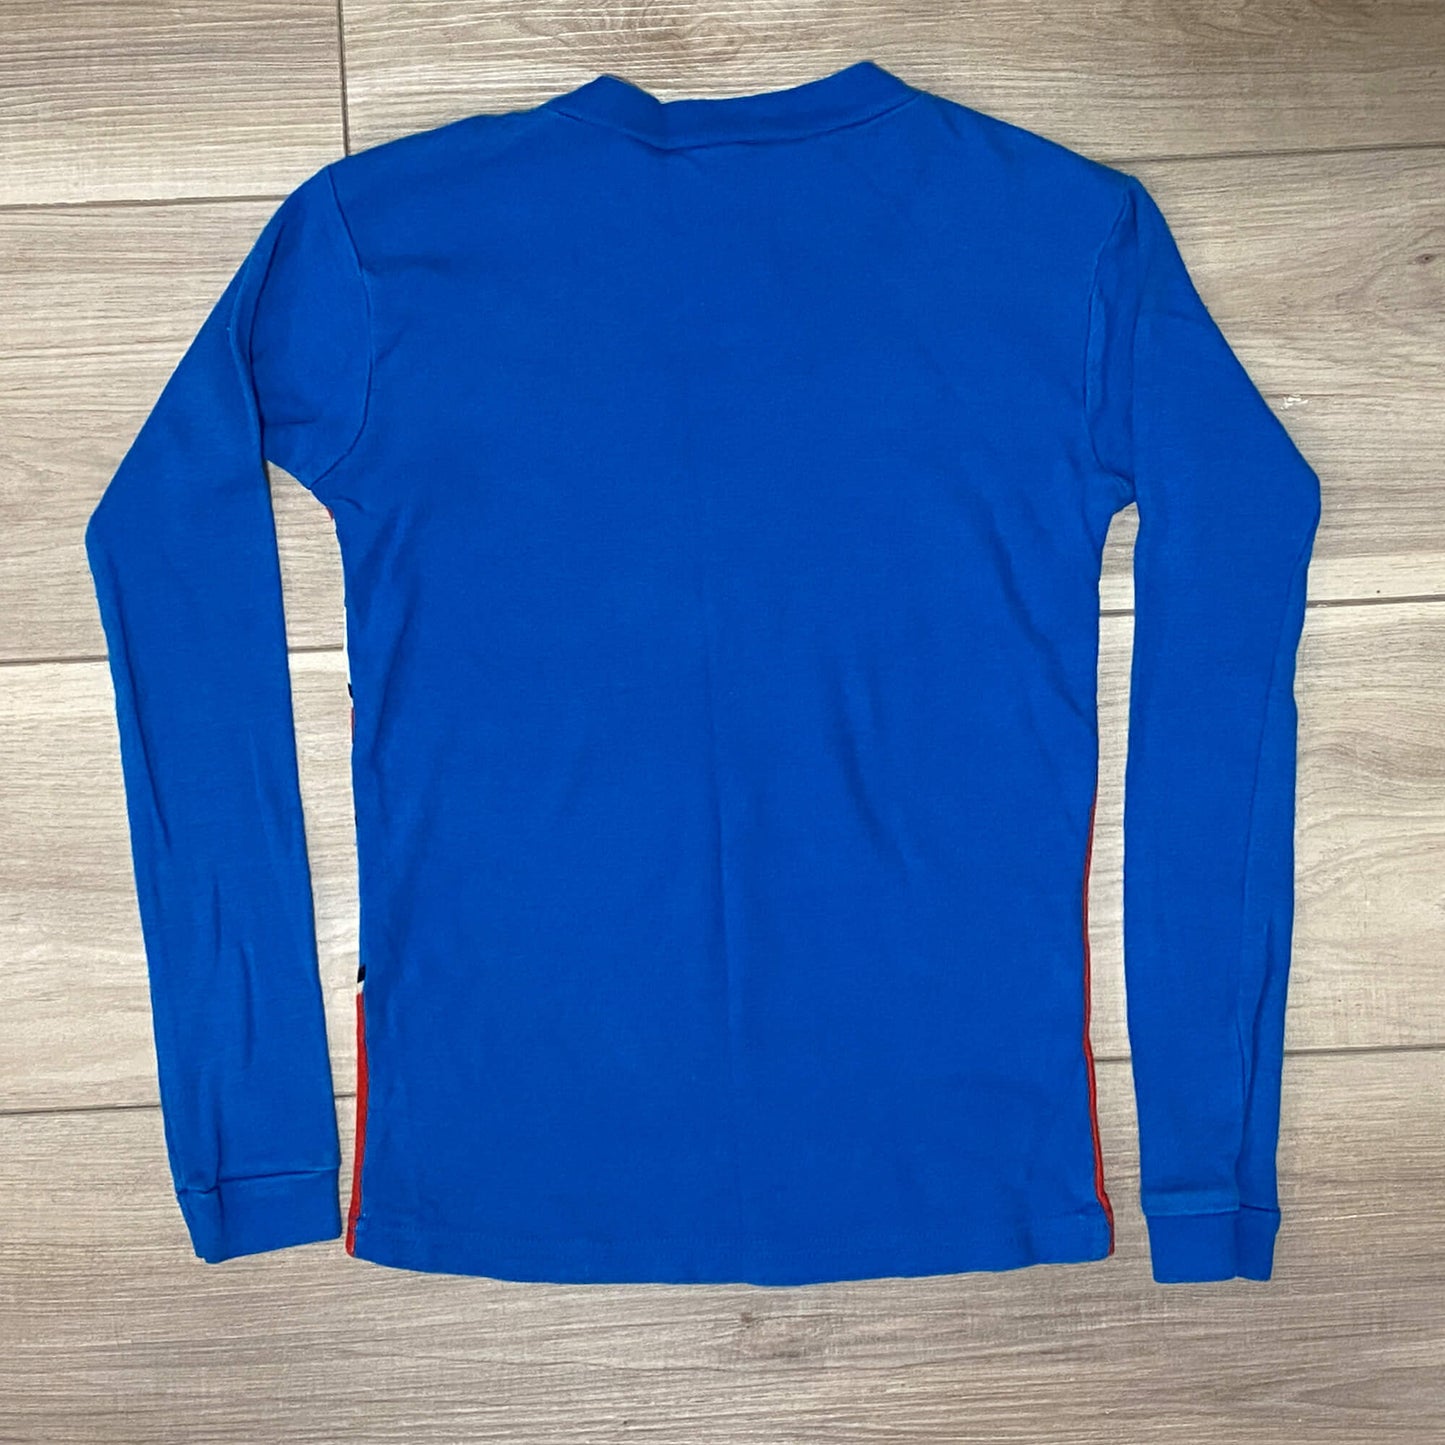 super-mario-long-sleeve-blue-and-red-boys-t-shirt-size-10_back-view-shop-eBargainsAndDeals.com